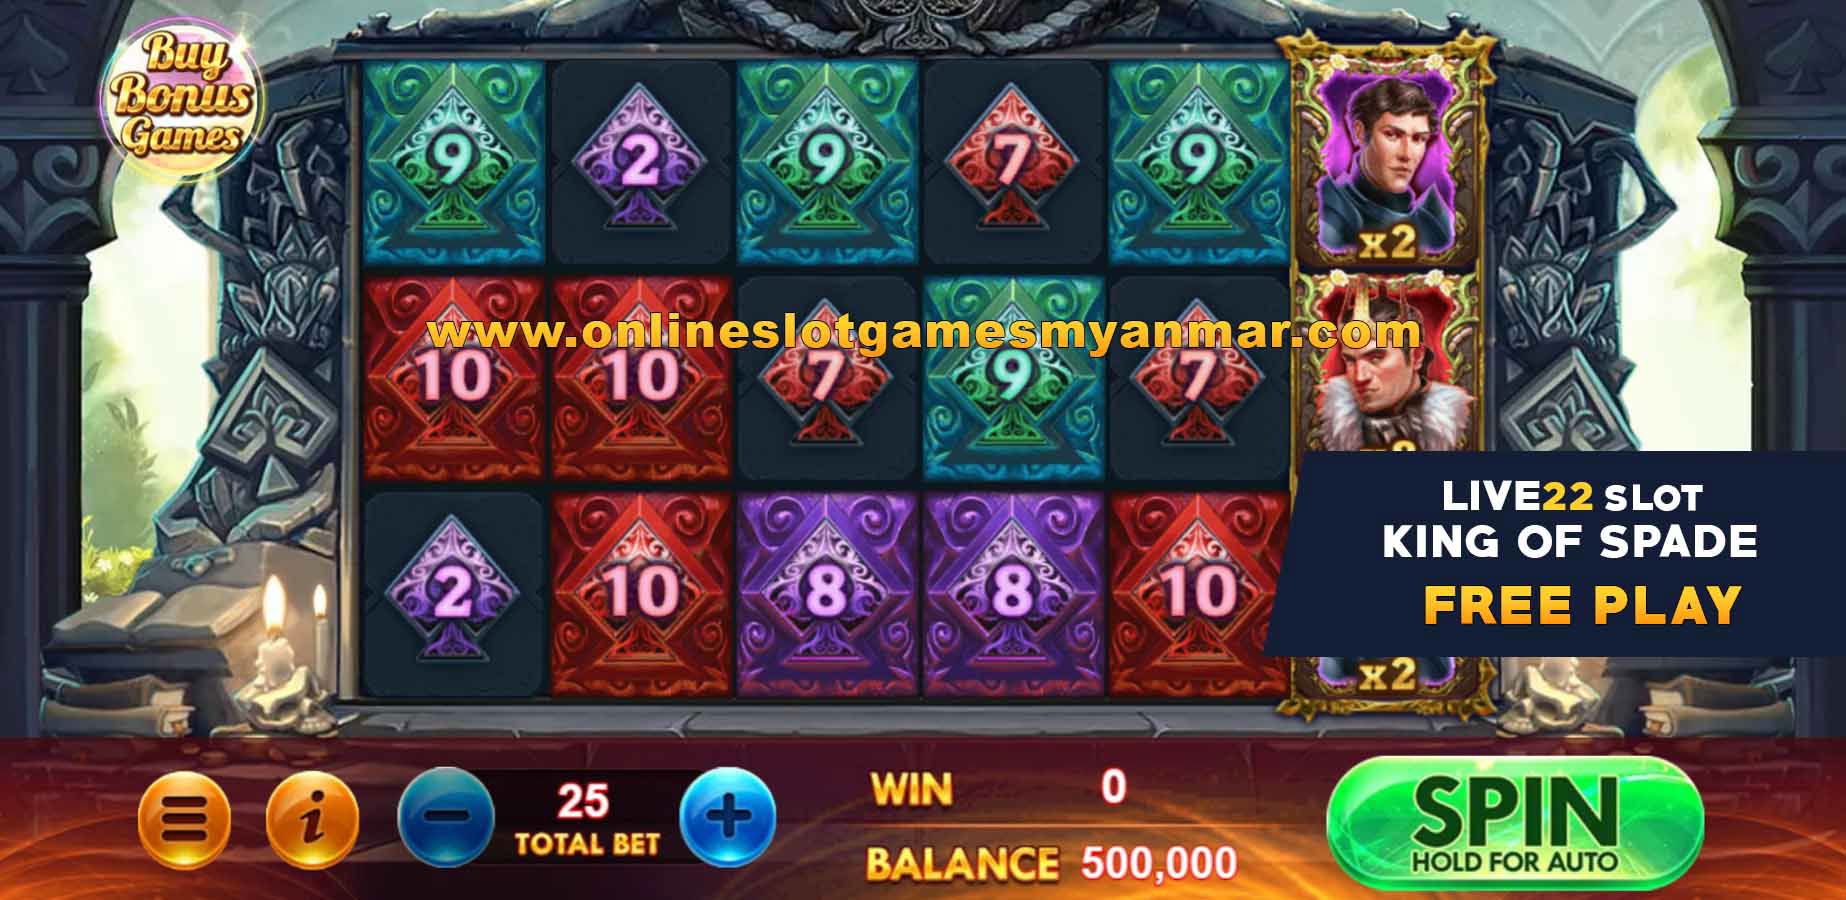 Free Play 5 KING OF SPADE Slot Game - Live22 Myanmar (1)